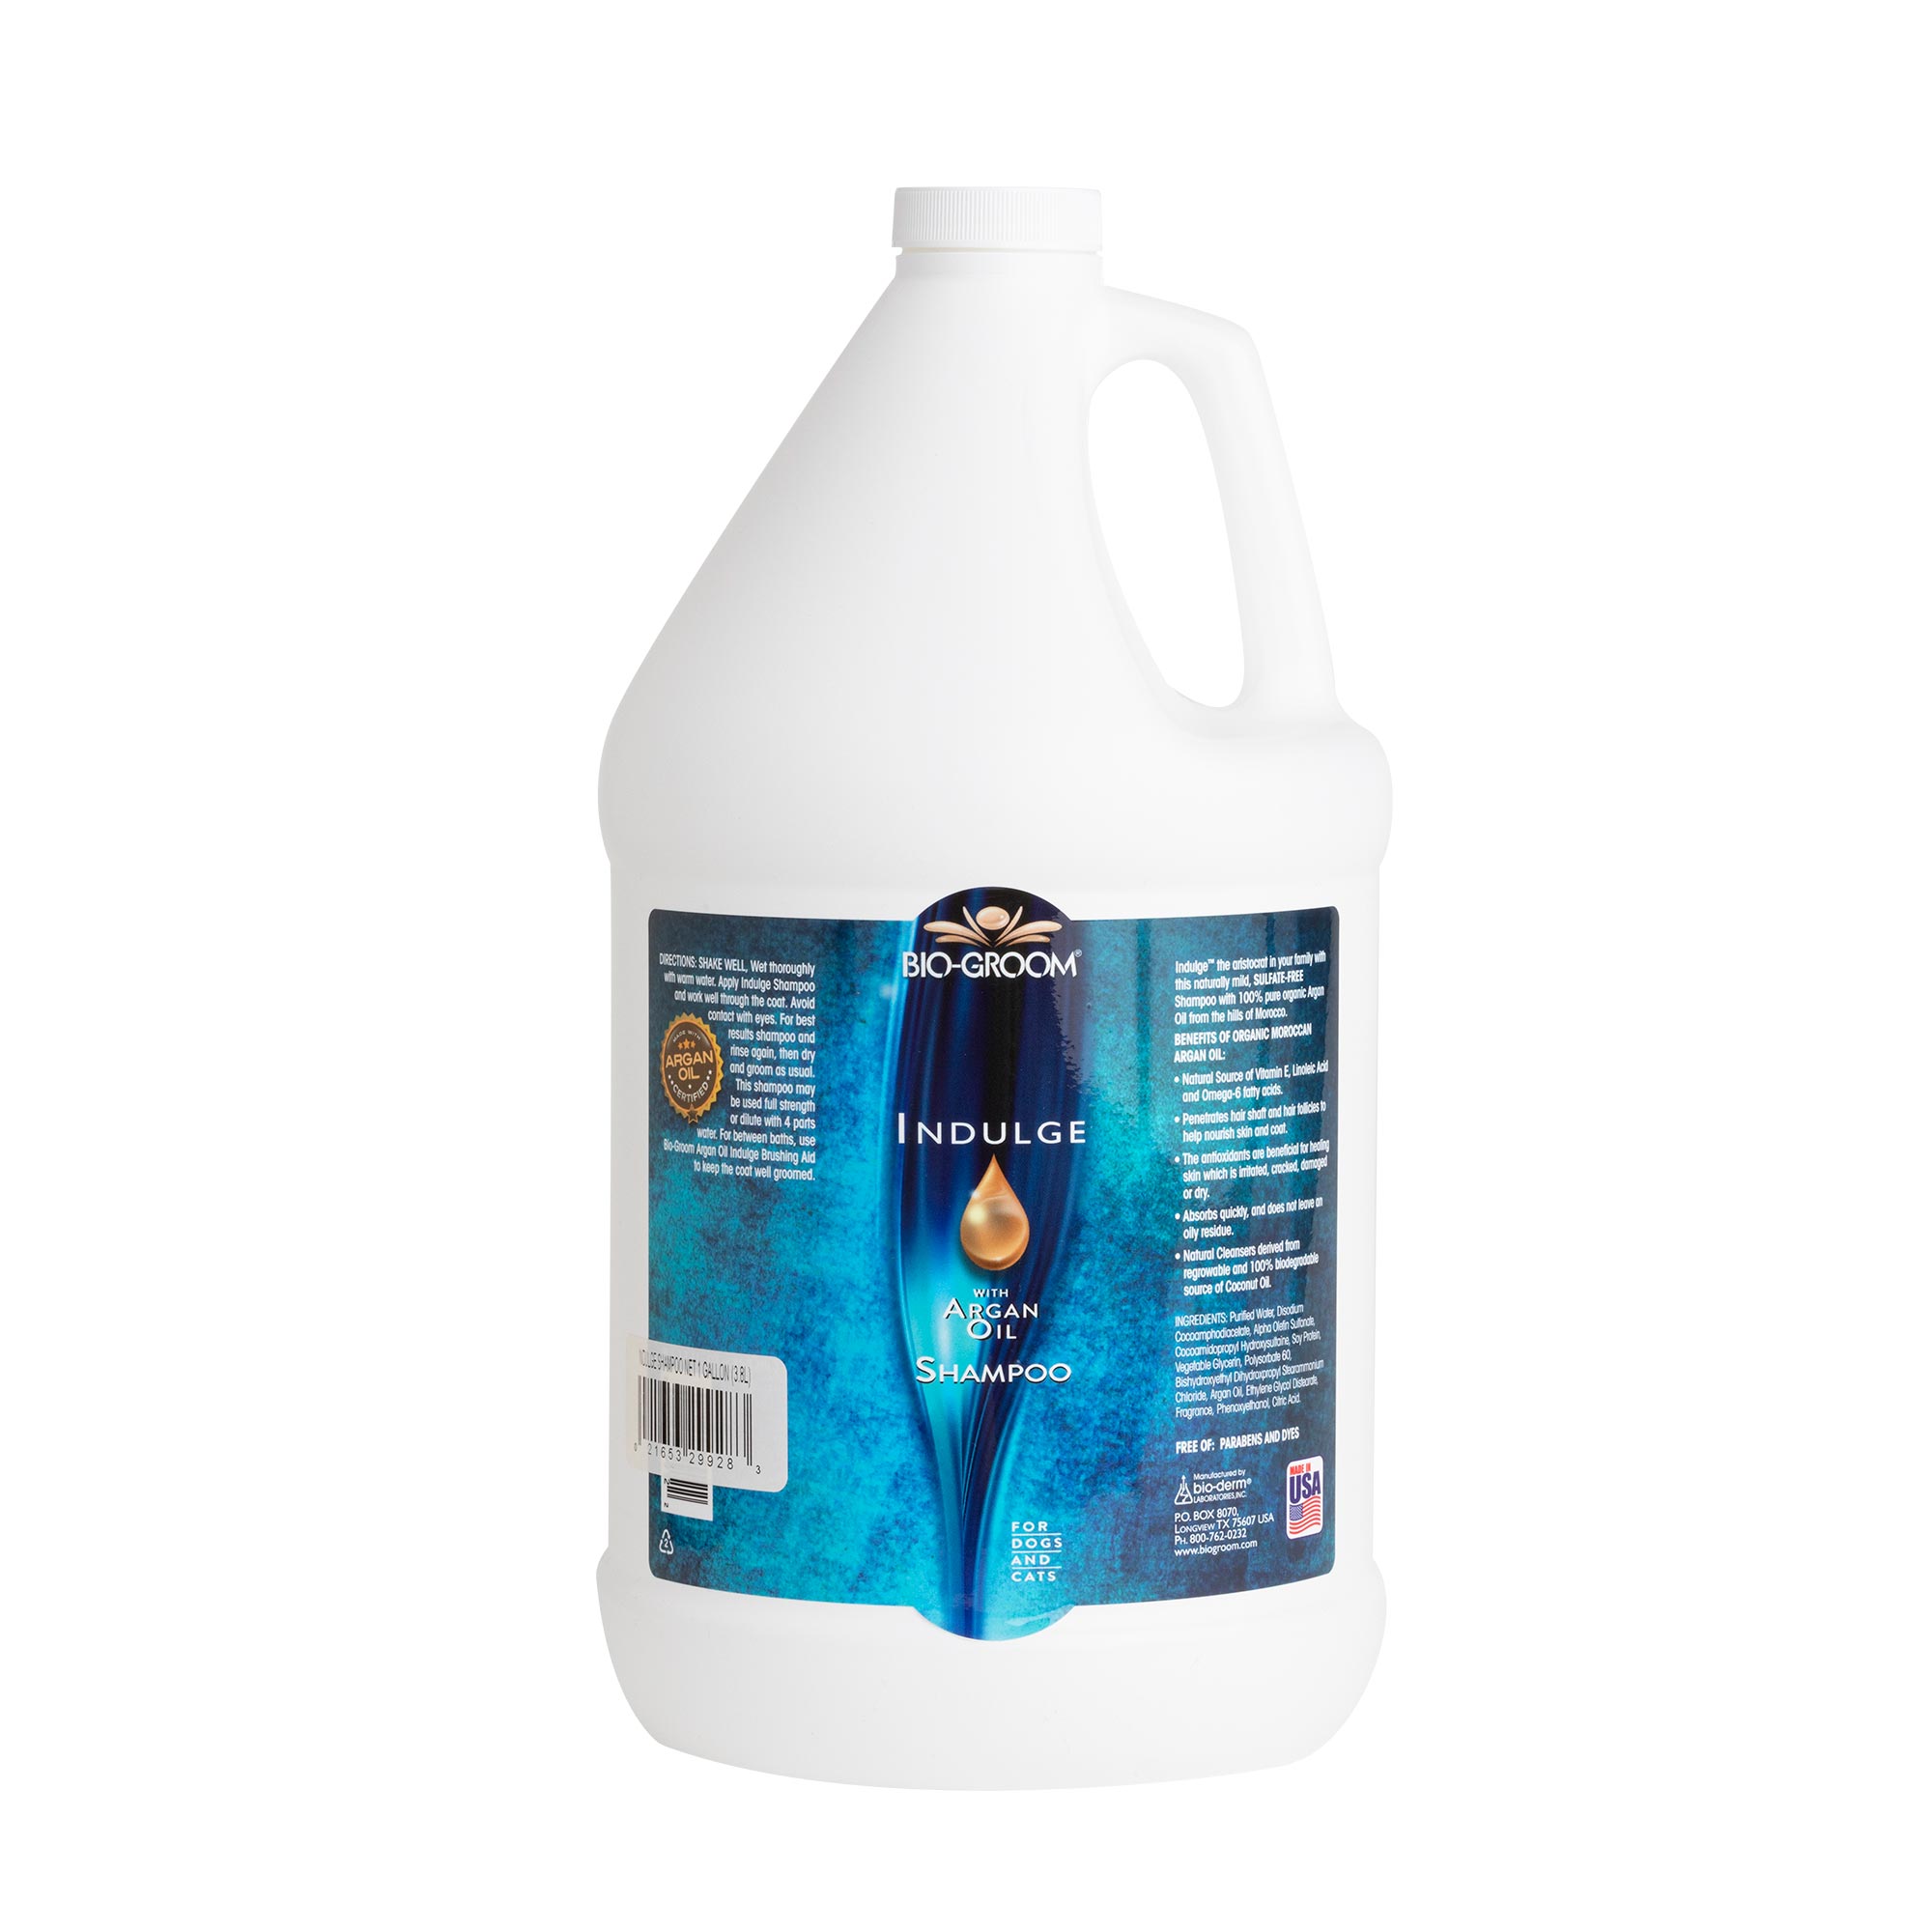 Bio-Groom - Indulge Sulfate-Free with Argan Oil - Shampoo - 3.78 litres